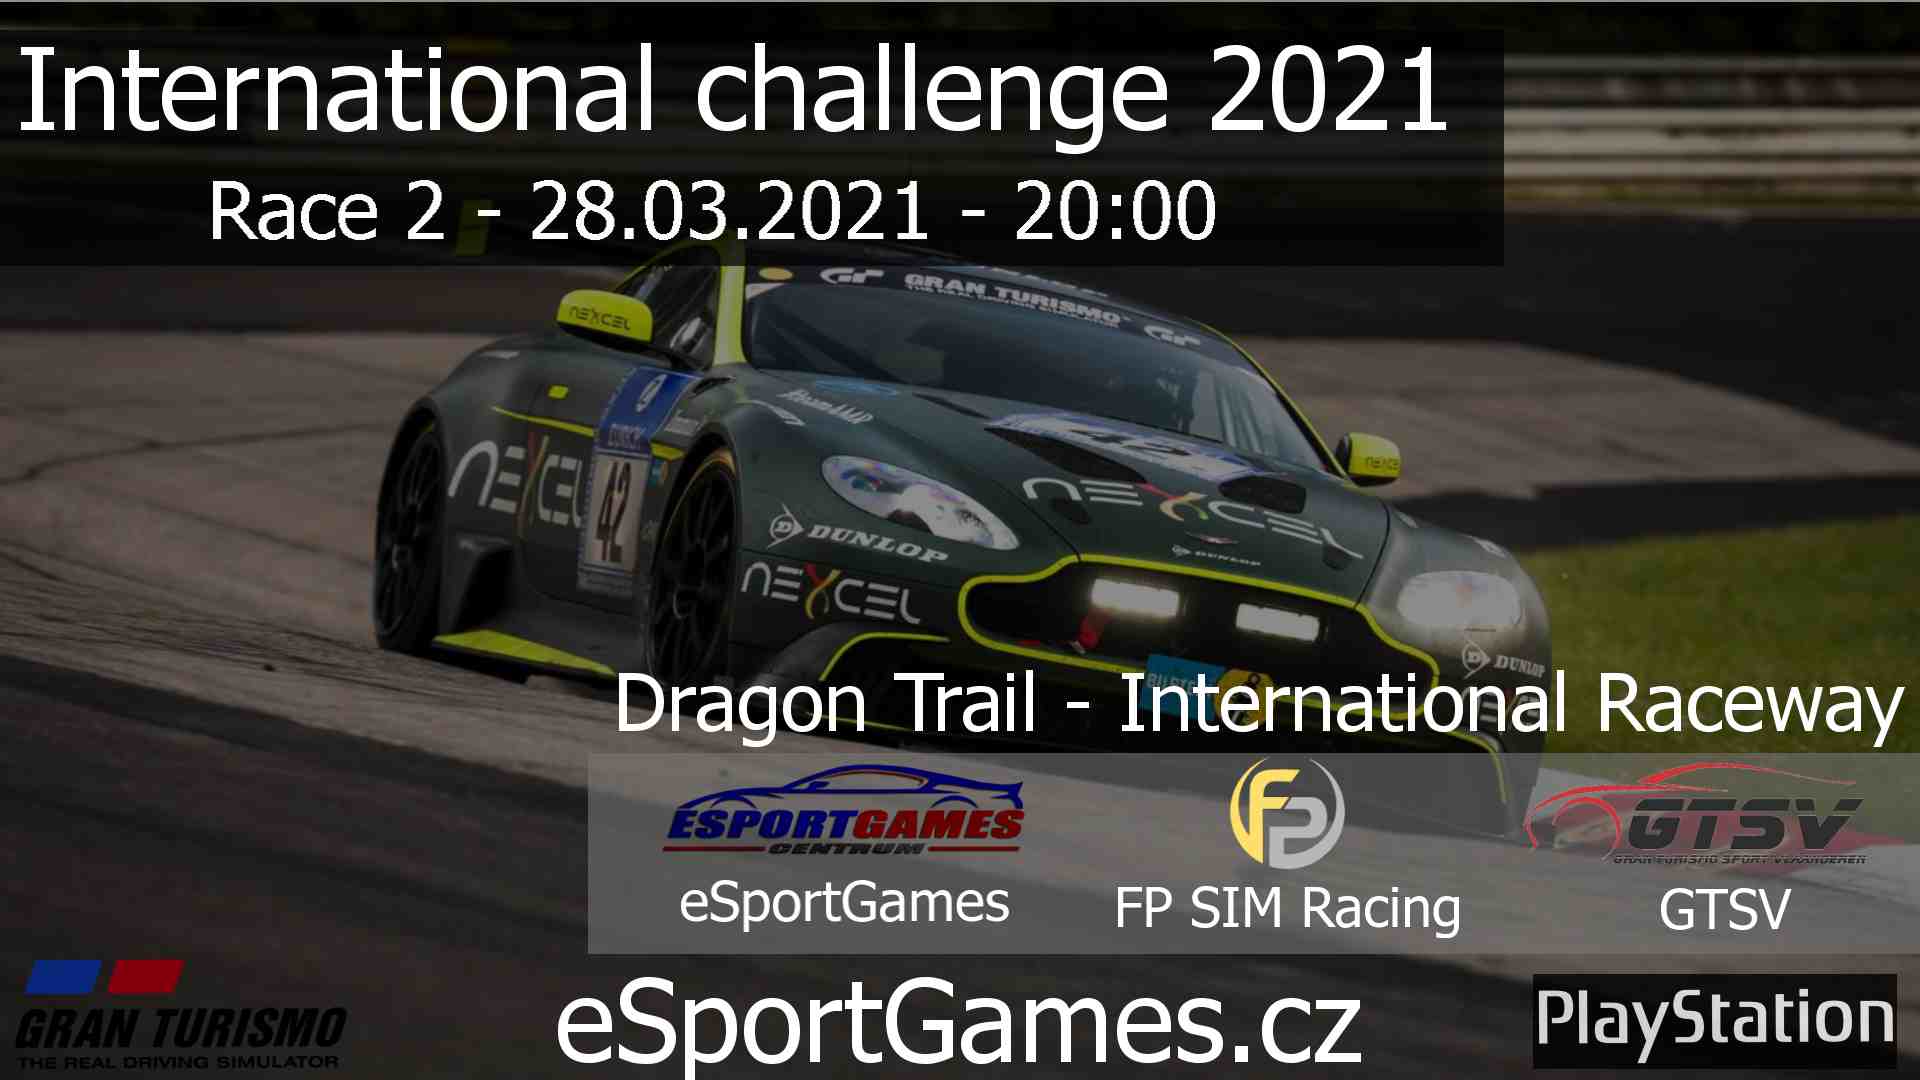 International challenge 2021 - Race 2 - Dragon Trail International Raceway